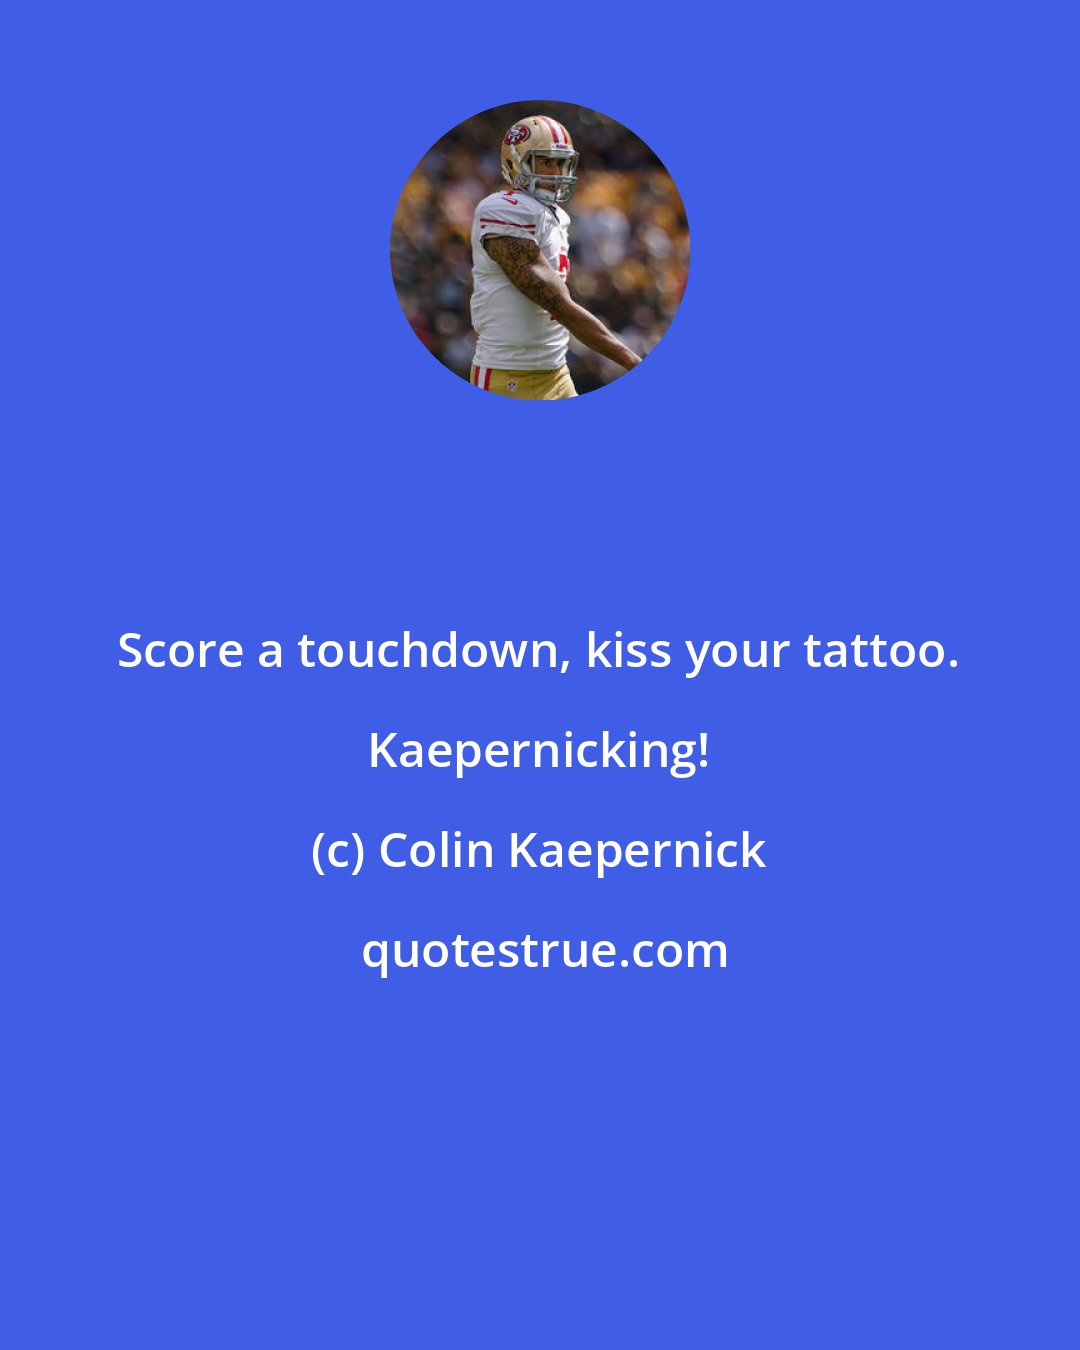 Colin Kaepernick: Score a touchdown, kiss your tattoo. Kaepernicking!